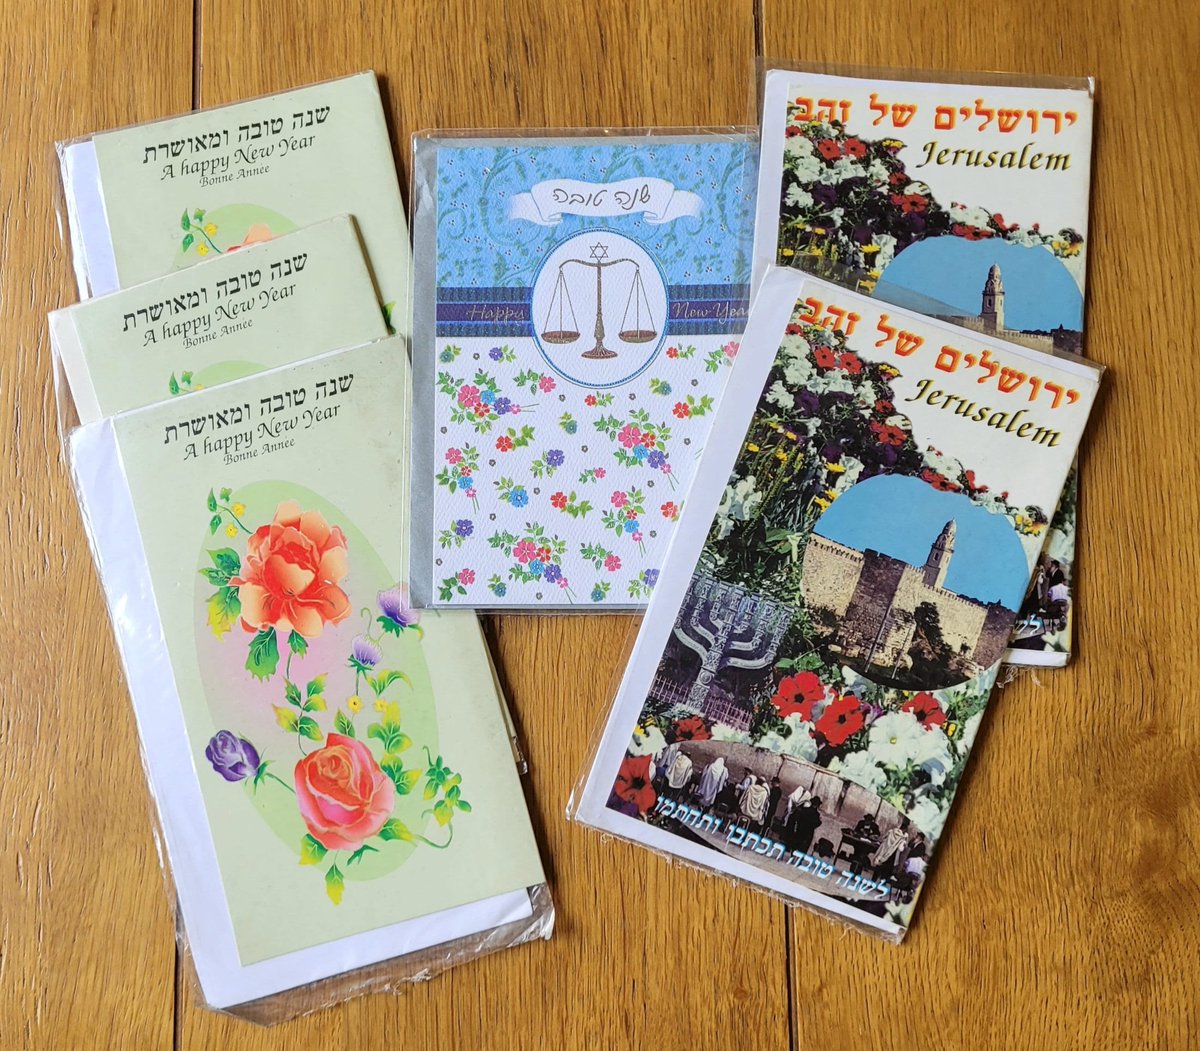 L'shana Tova Cards, #ShanaTova Greeting Cards with Envelopes, Dead Stock, Lot of  6 Unwritten, #Judaica, #Jewishholidays  #JewishNewYear grandmasdowry.etsy.com/listing/173288…